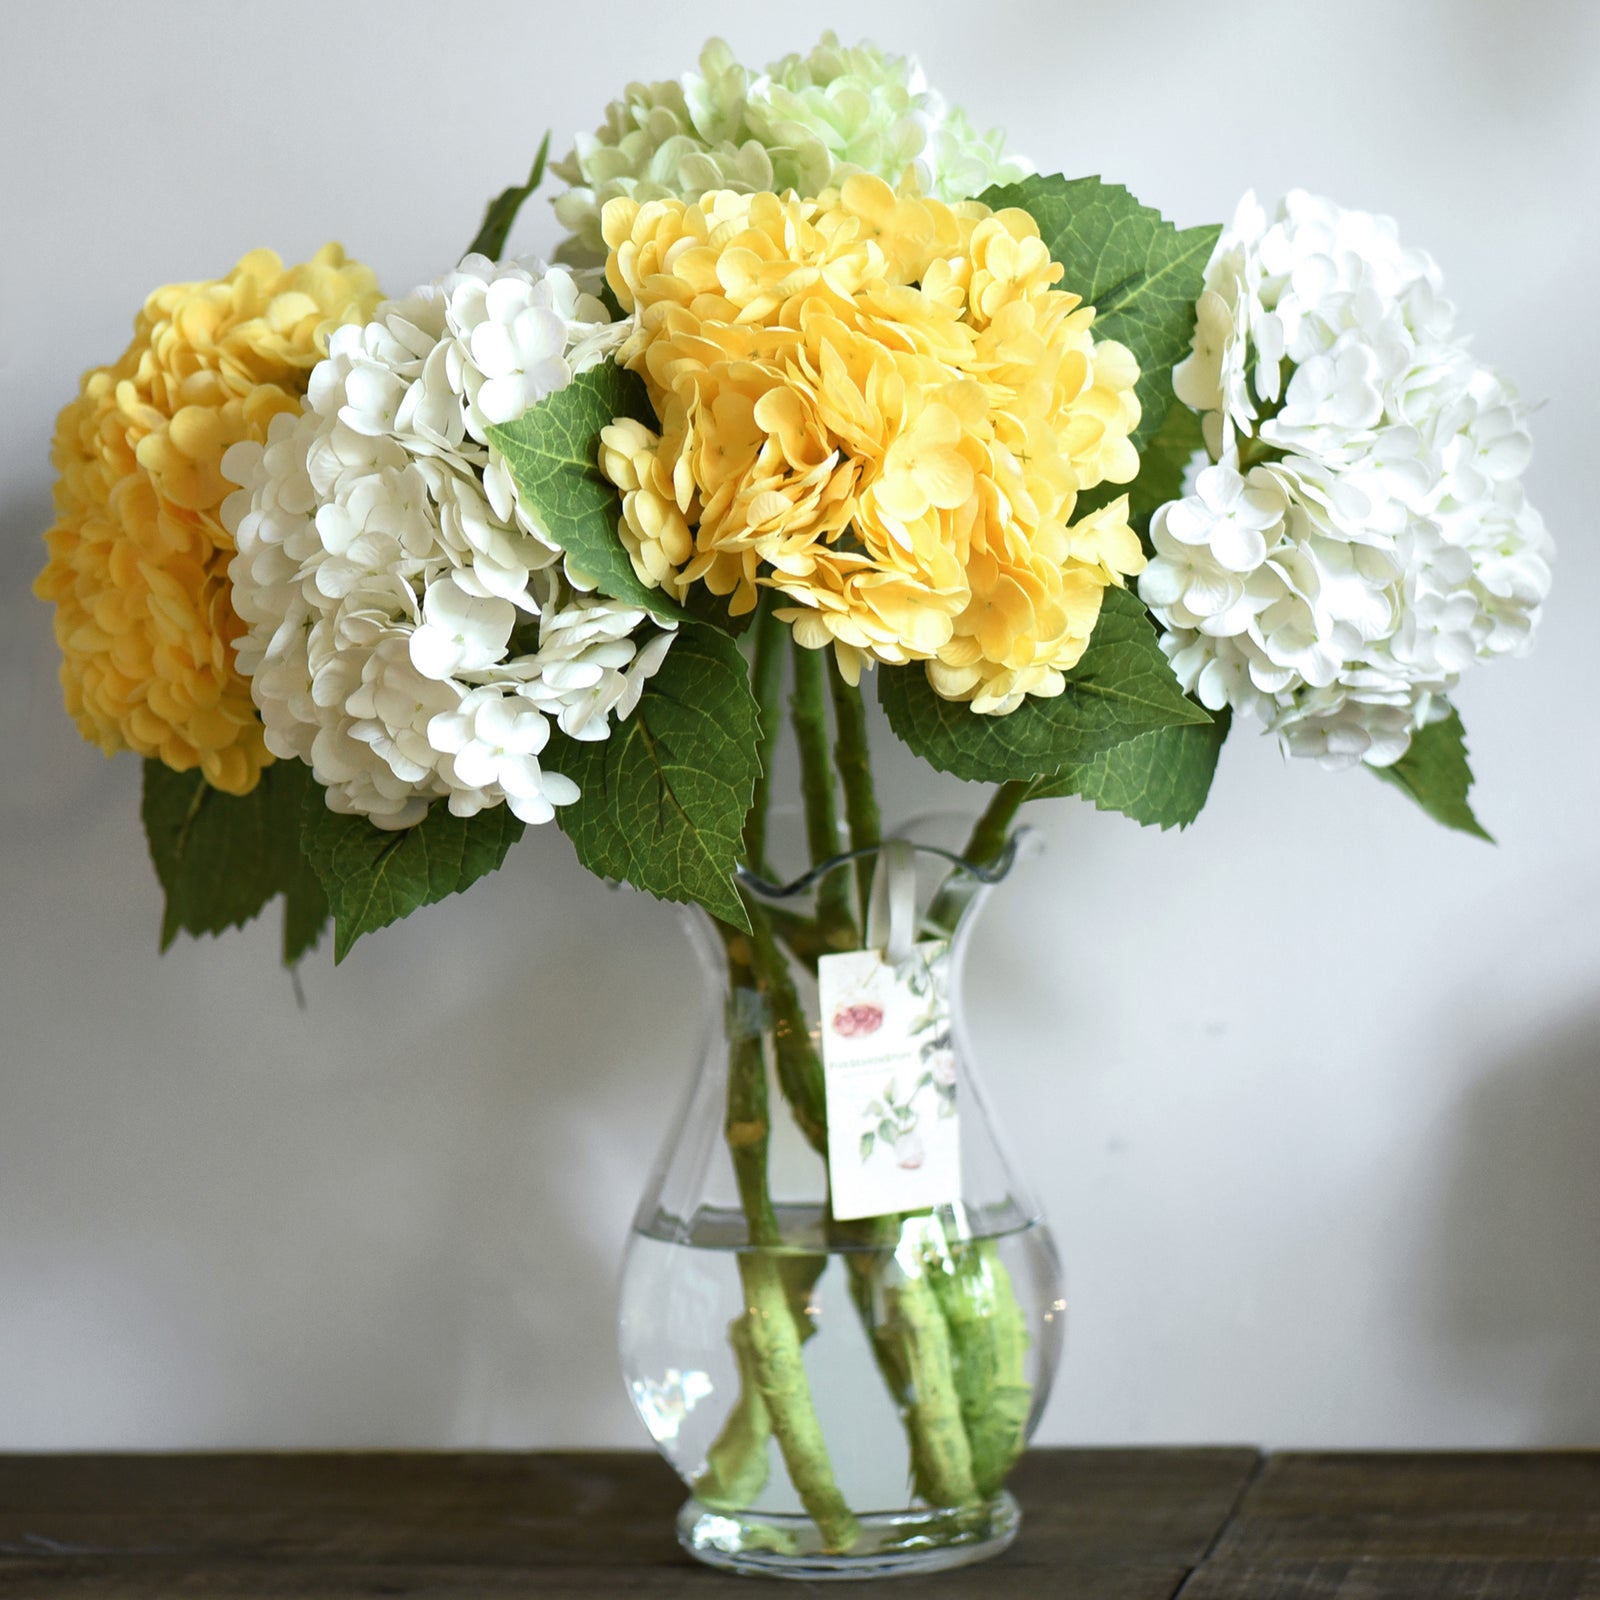 FiveSeasonStuff 2 Stems Real Touch Petals and Leaves Artificial Hydrangea Flowers Long Stem Floral Arrangement | for Wedding Bridal Party Home Décor DIY Floral Decoration (Yellow)